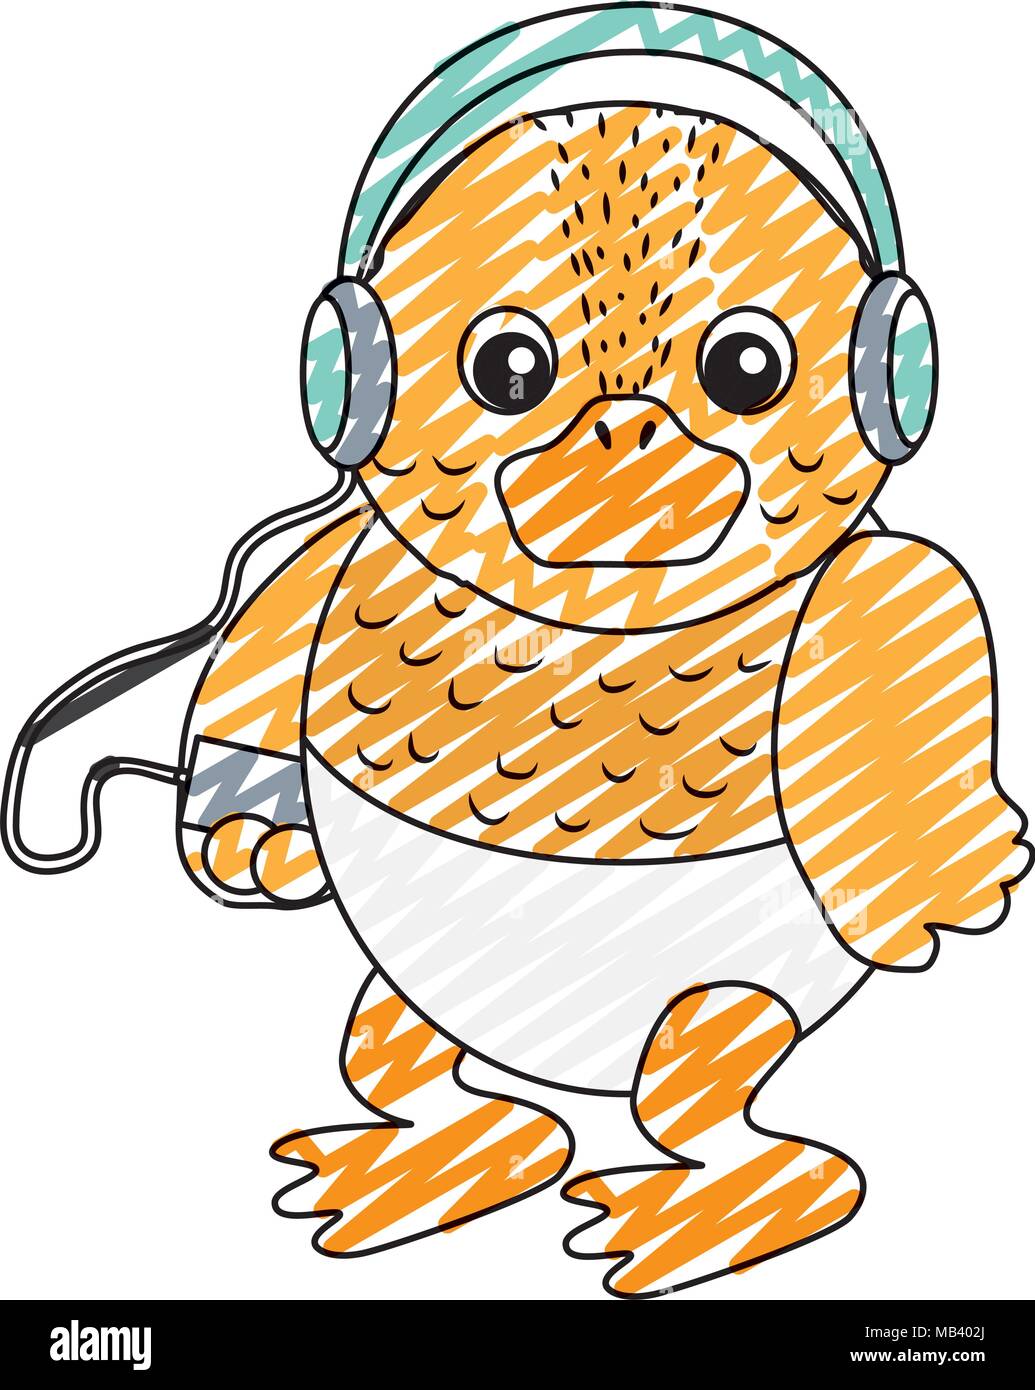 Doodle baby Ente Tier mit mp3 Kopfhörer und Windel Stock-Vektorgrafik -  Alamy